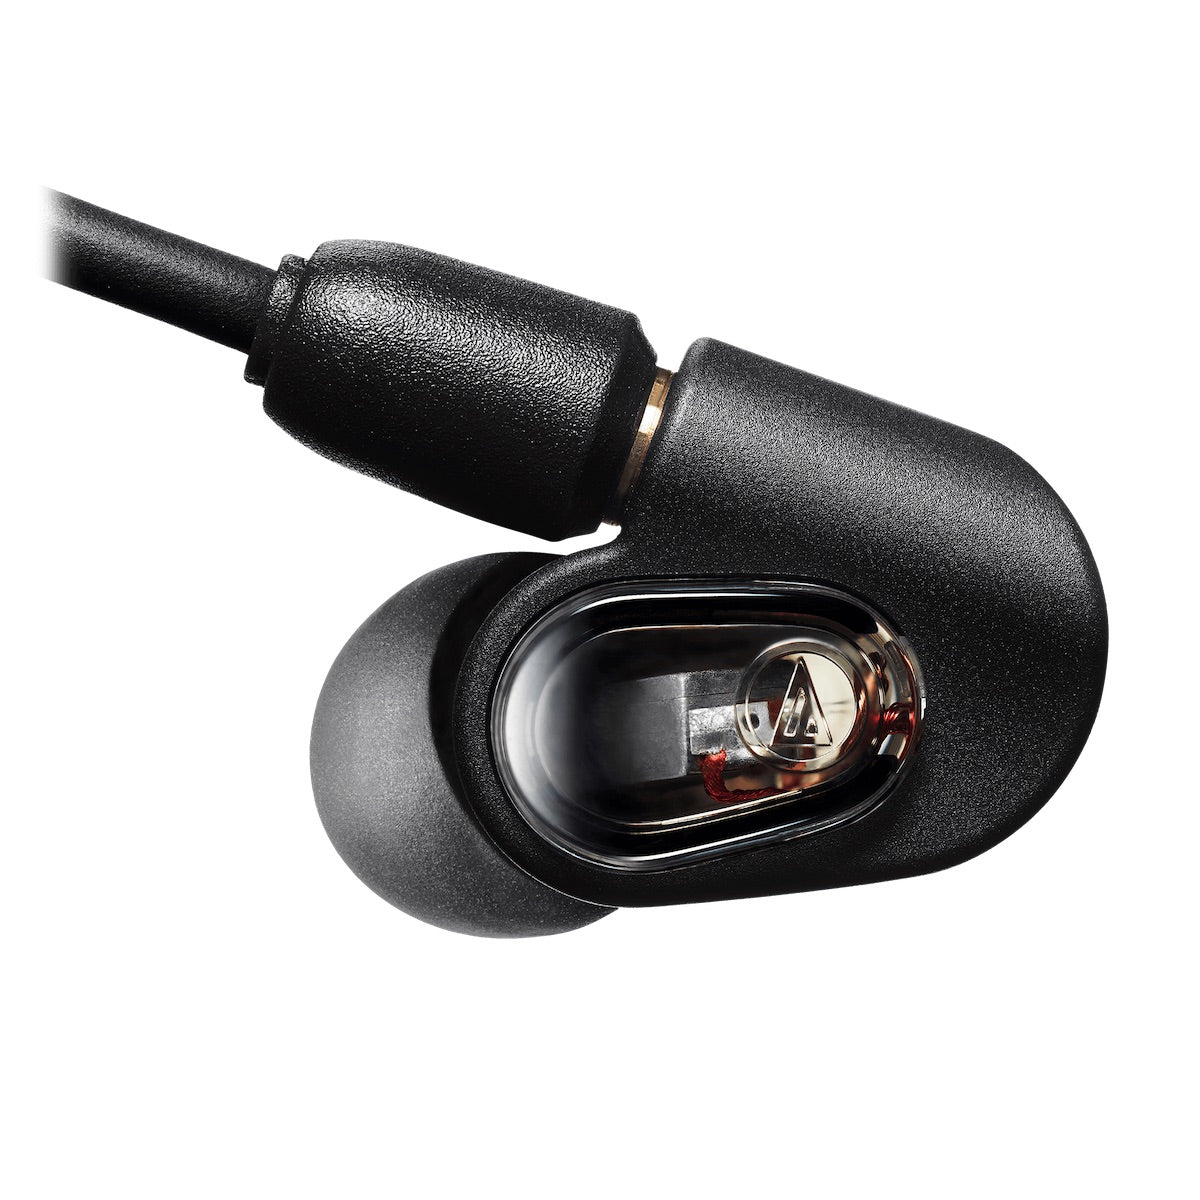 Audio-Technica ATH-E50 - Professional In-Ear Monitor Headphones, driver closeup